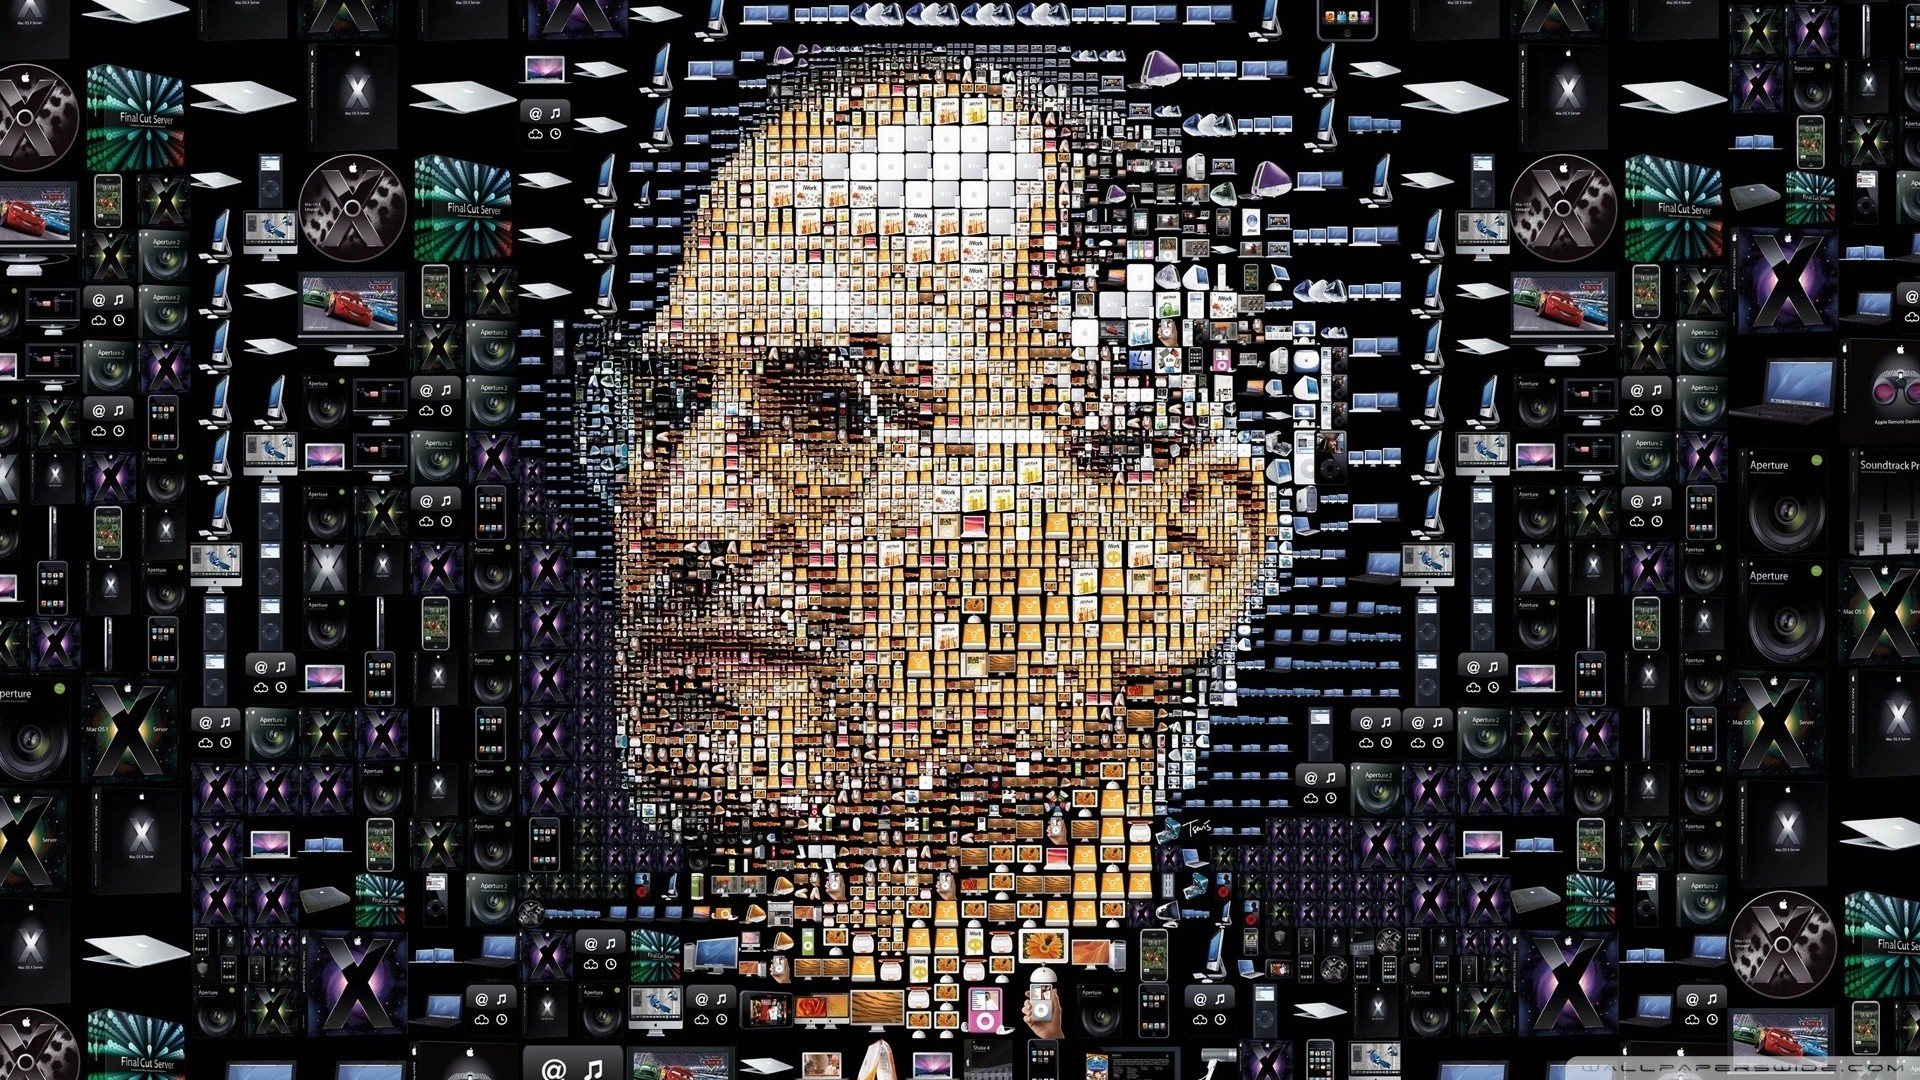 Steve Jobs Mosaic Men Digital Art 1920x1080